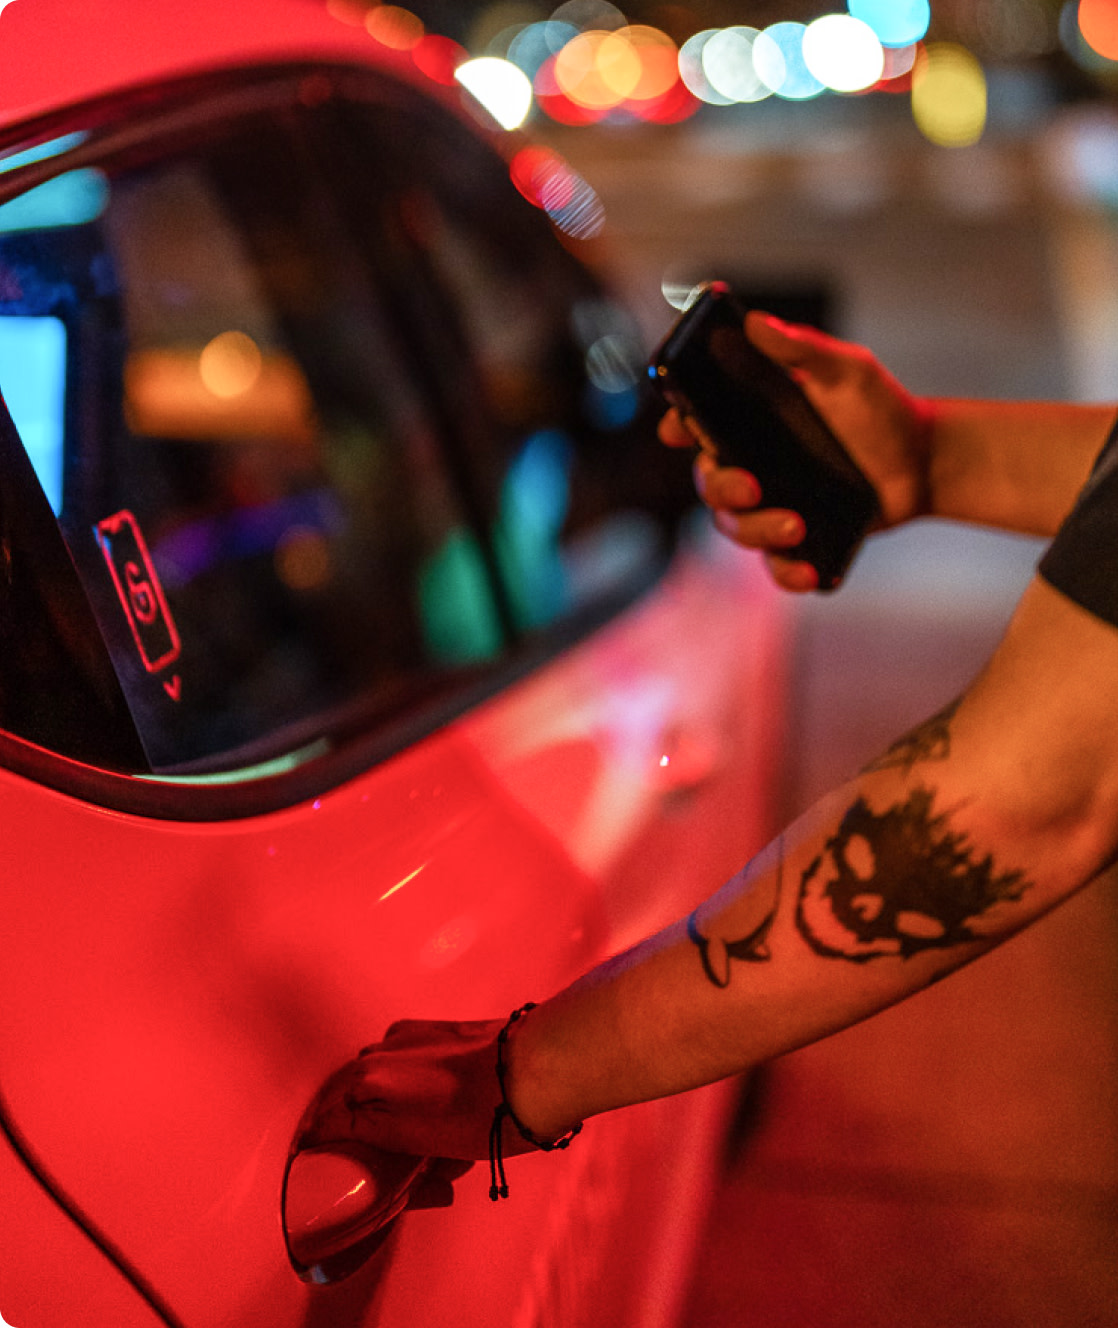 Rider entering self-driving vehicle at night